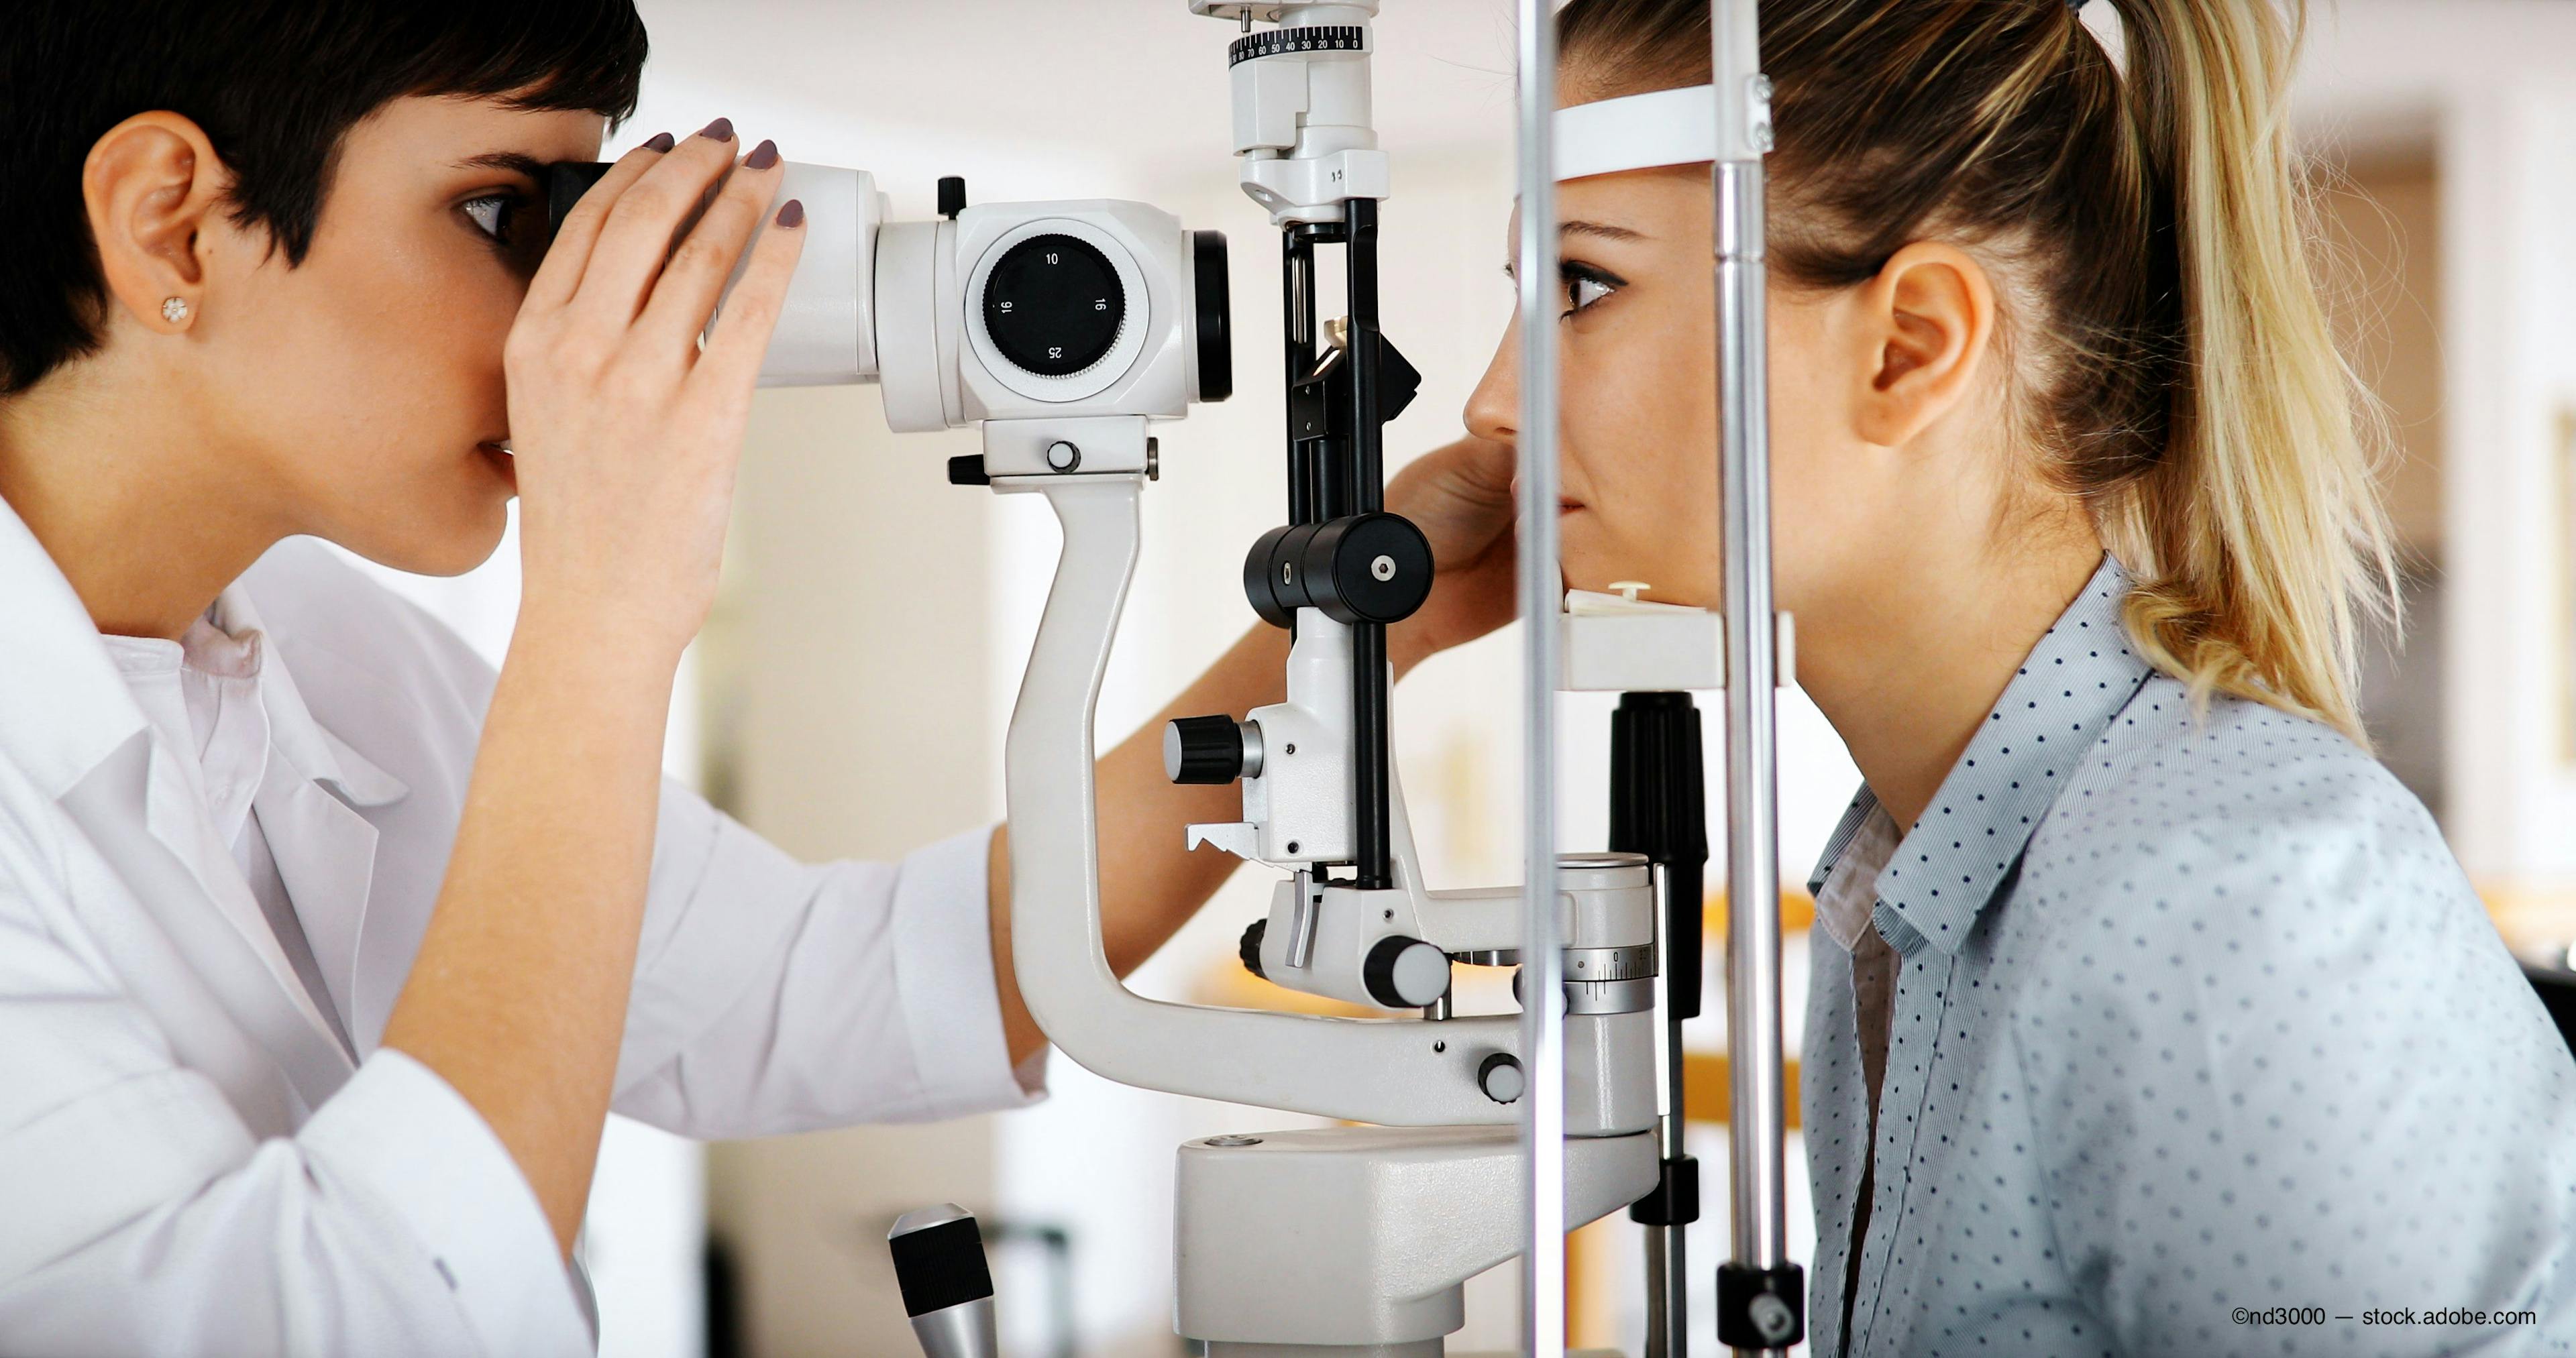 Blog: Modern-day techniques for diagnosing dry eye disease